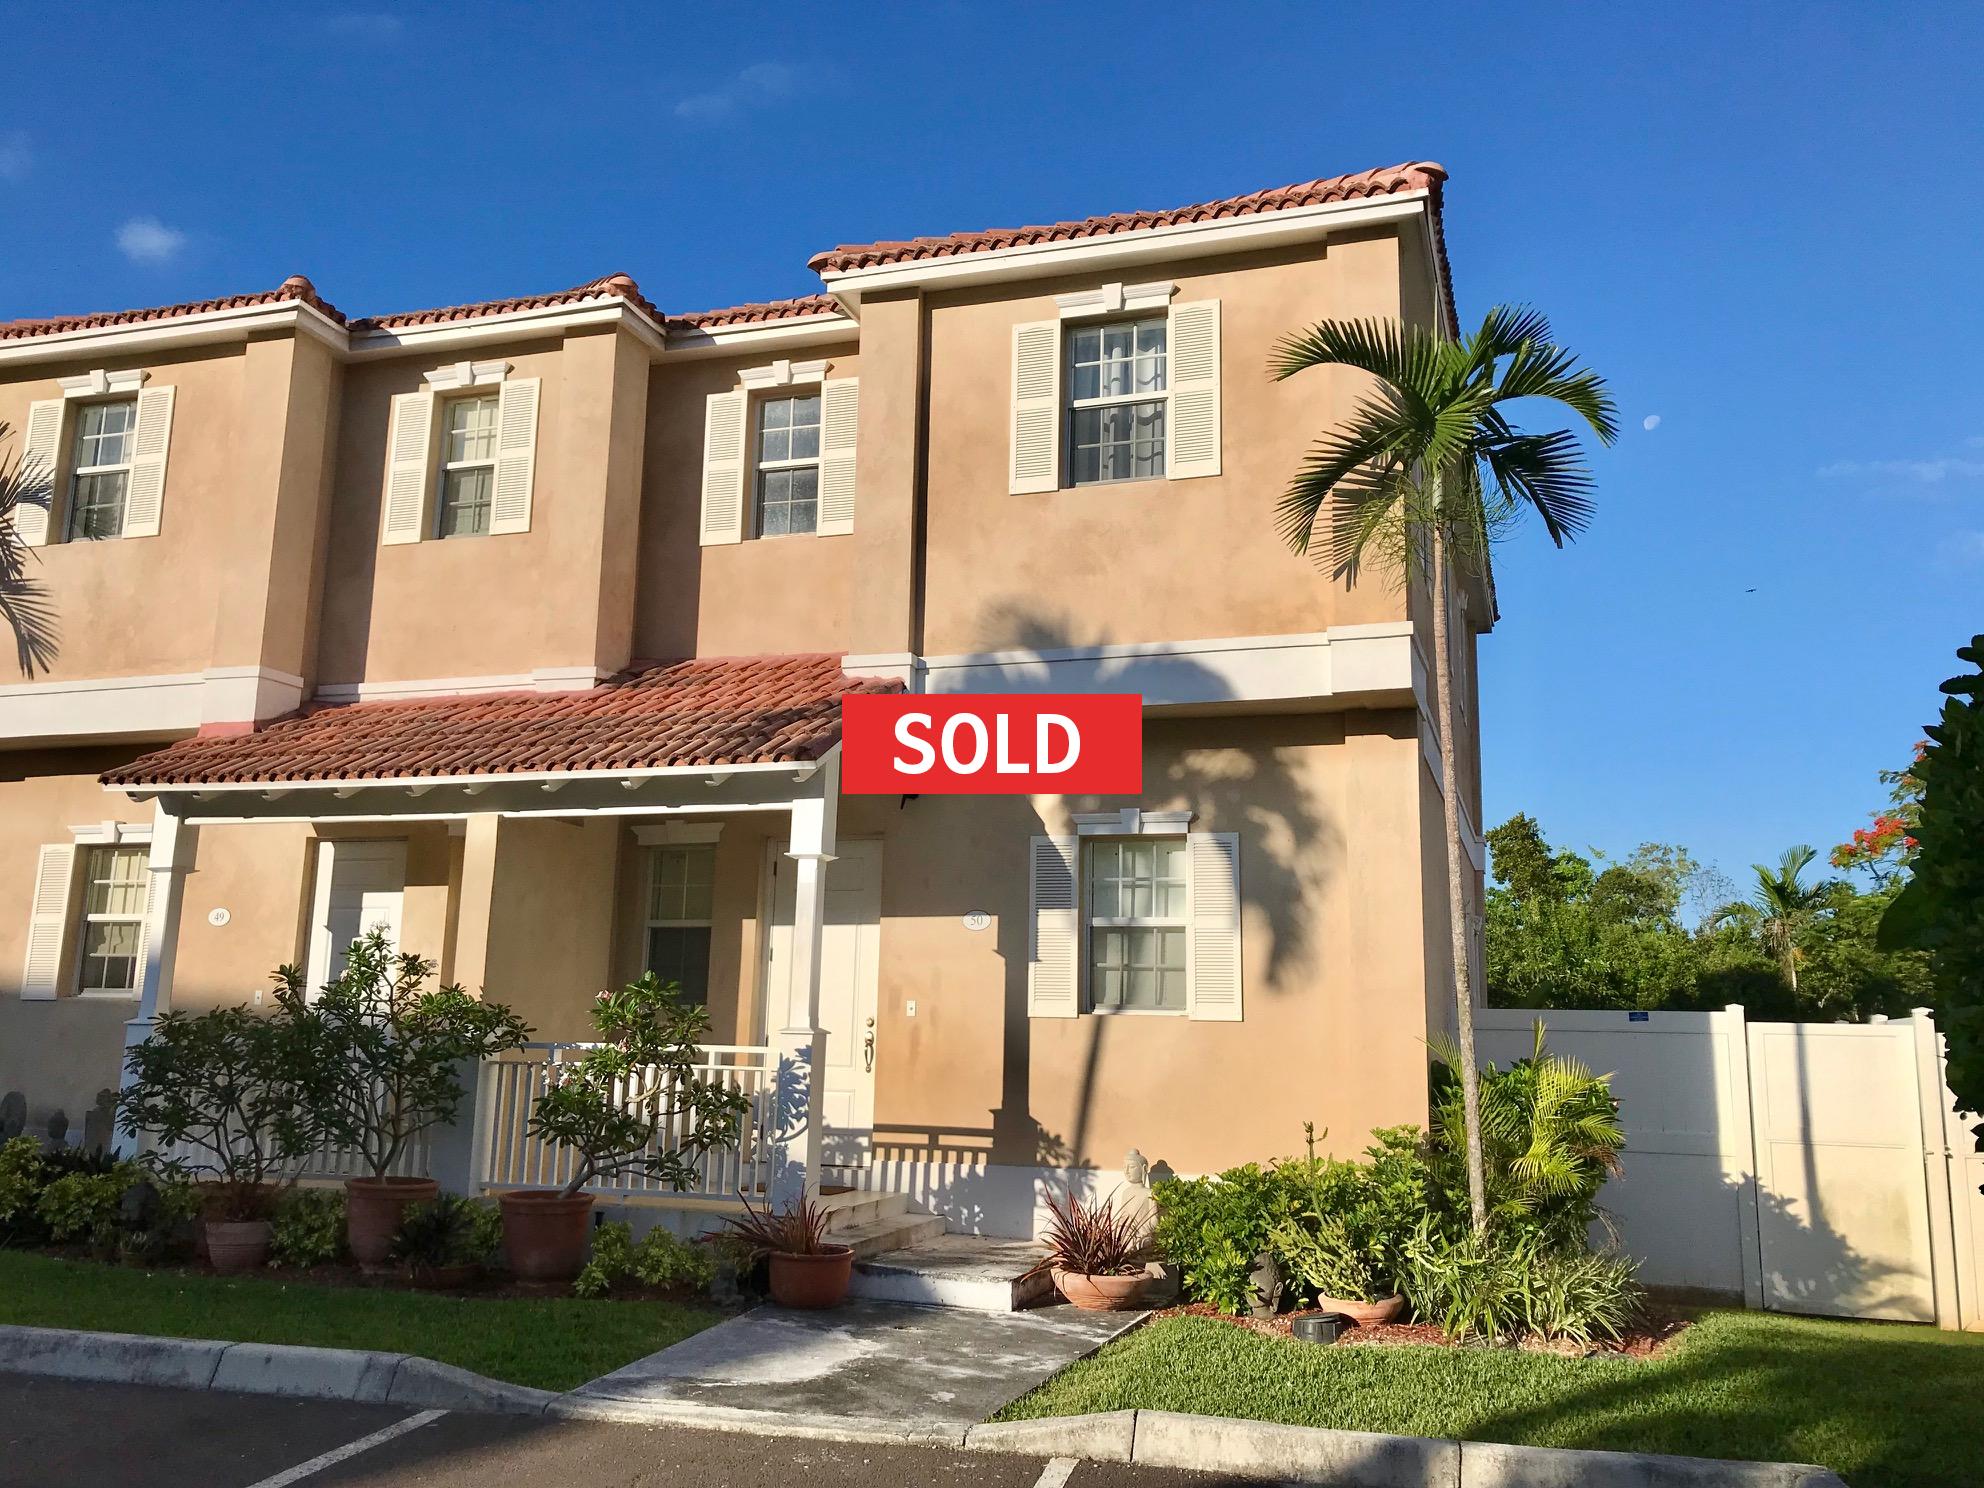 /listing-sold-balmoral-sandford-drive-31309.html from Coldwell Banker Bahamas Real Estate